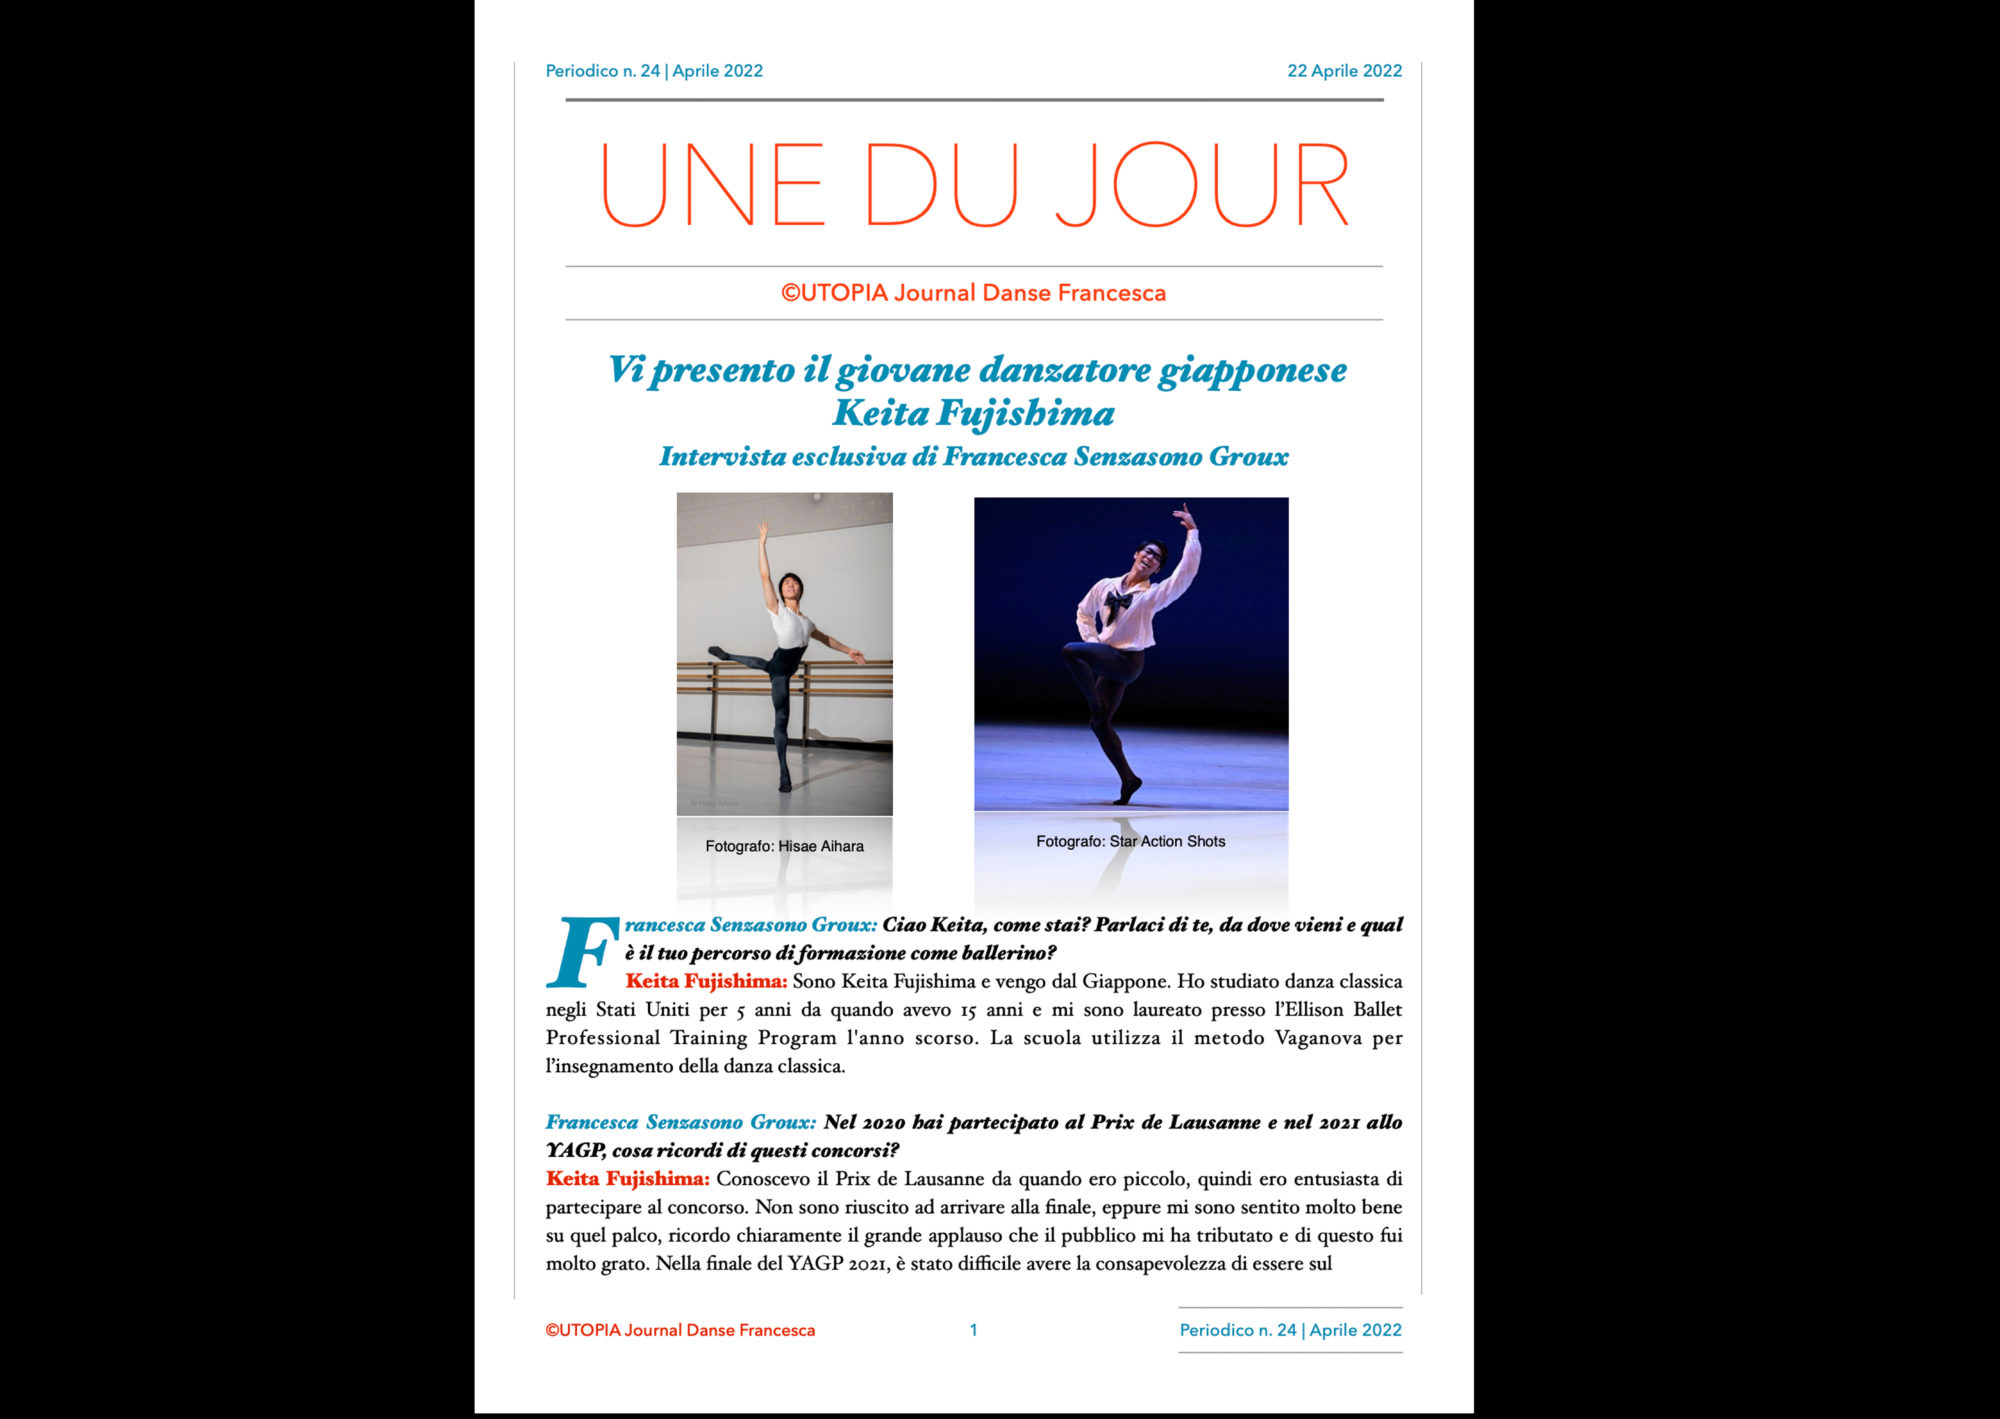 ©UTOPIA Journal Danse Francesca Periodico n.24 22 Aprile 2022 pagina 1